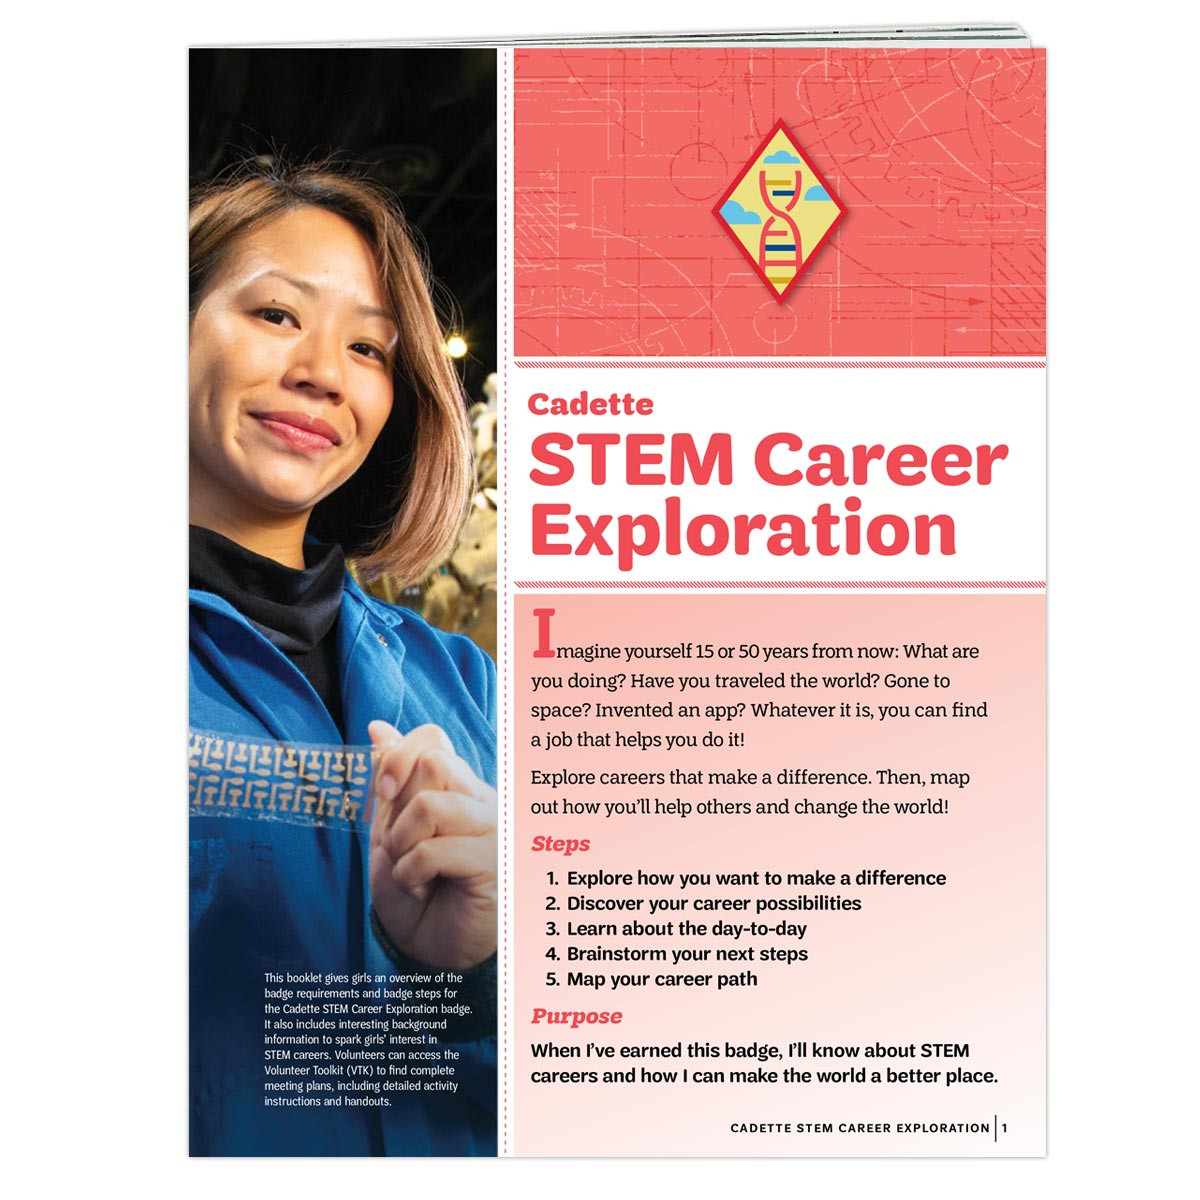 Cad. STEM Career Exploration REQ